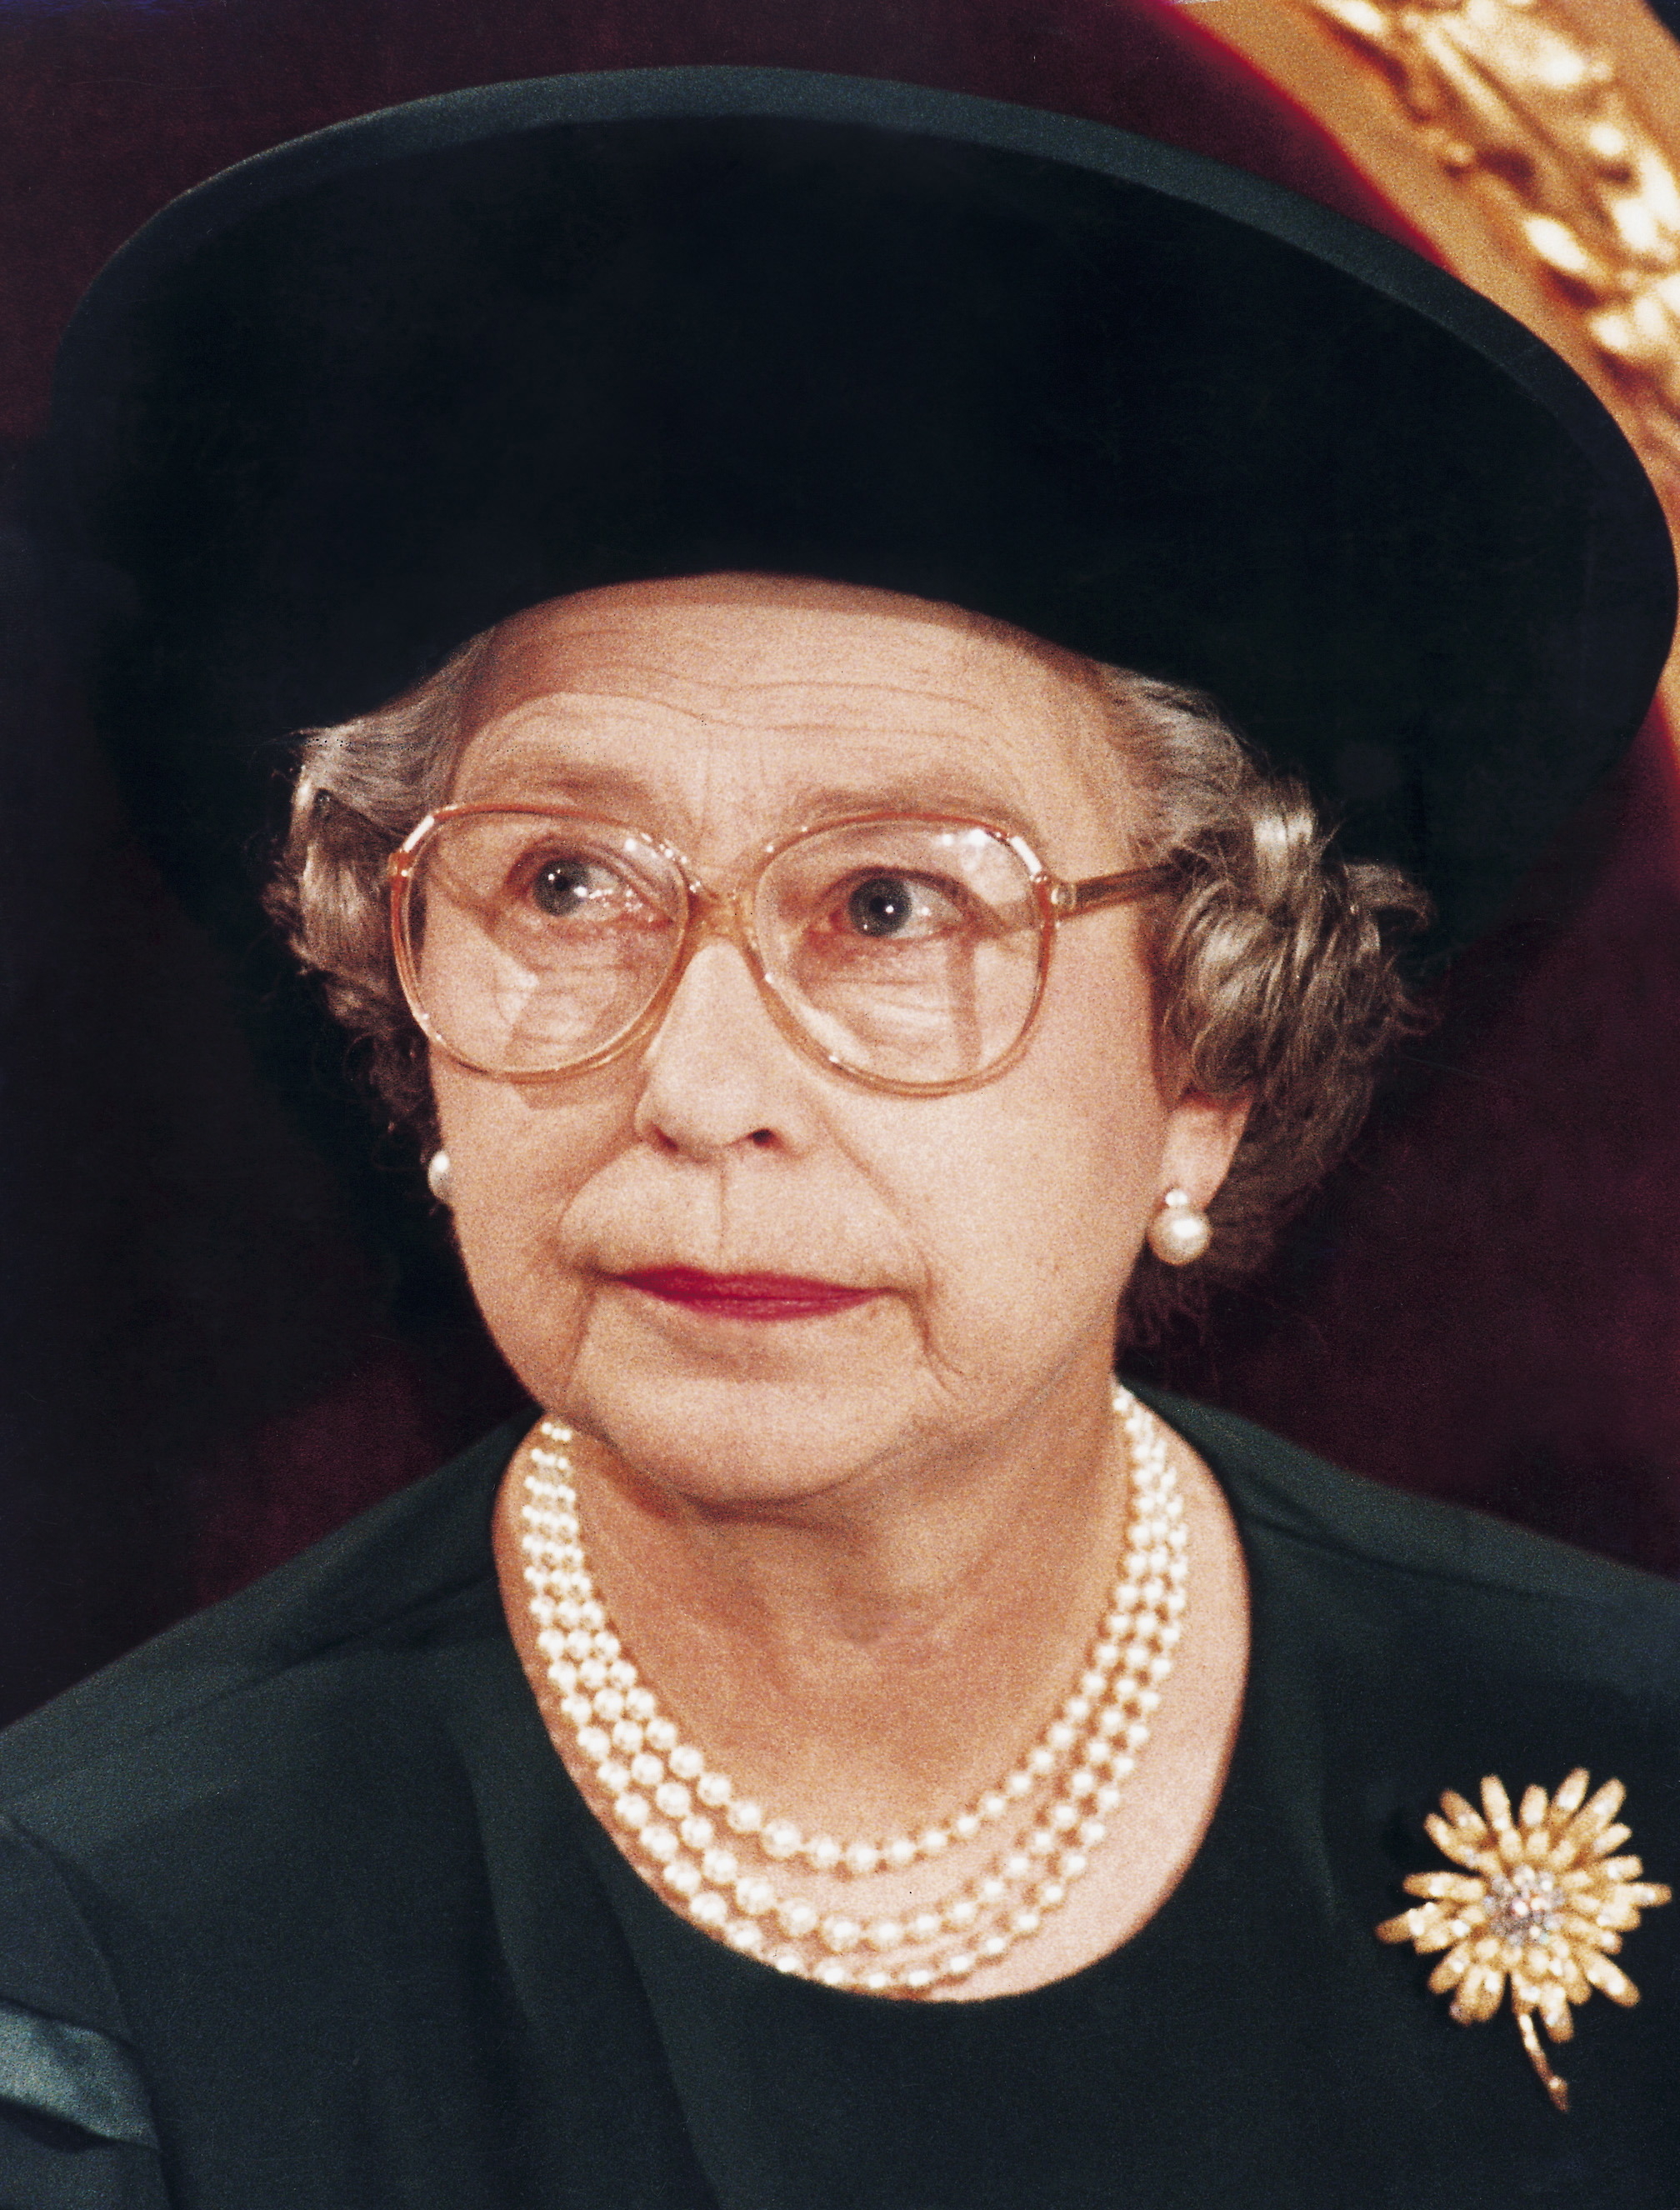 Queen Elizabeth II wearing pearls and a decorative brooch